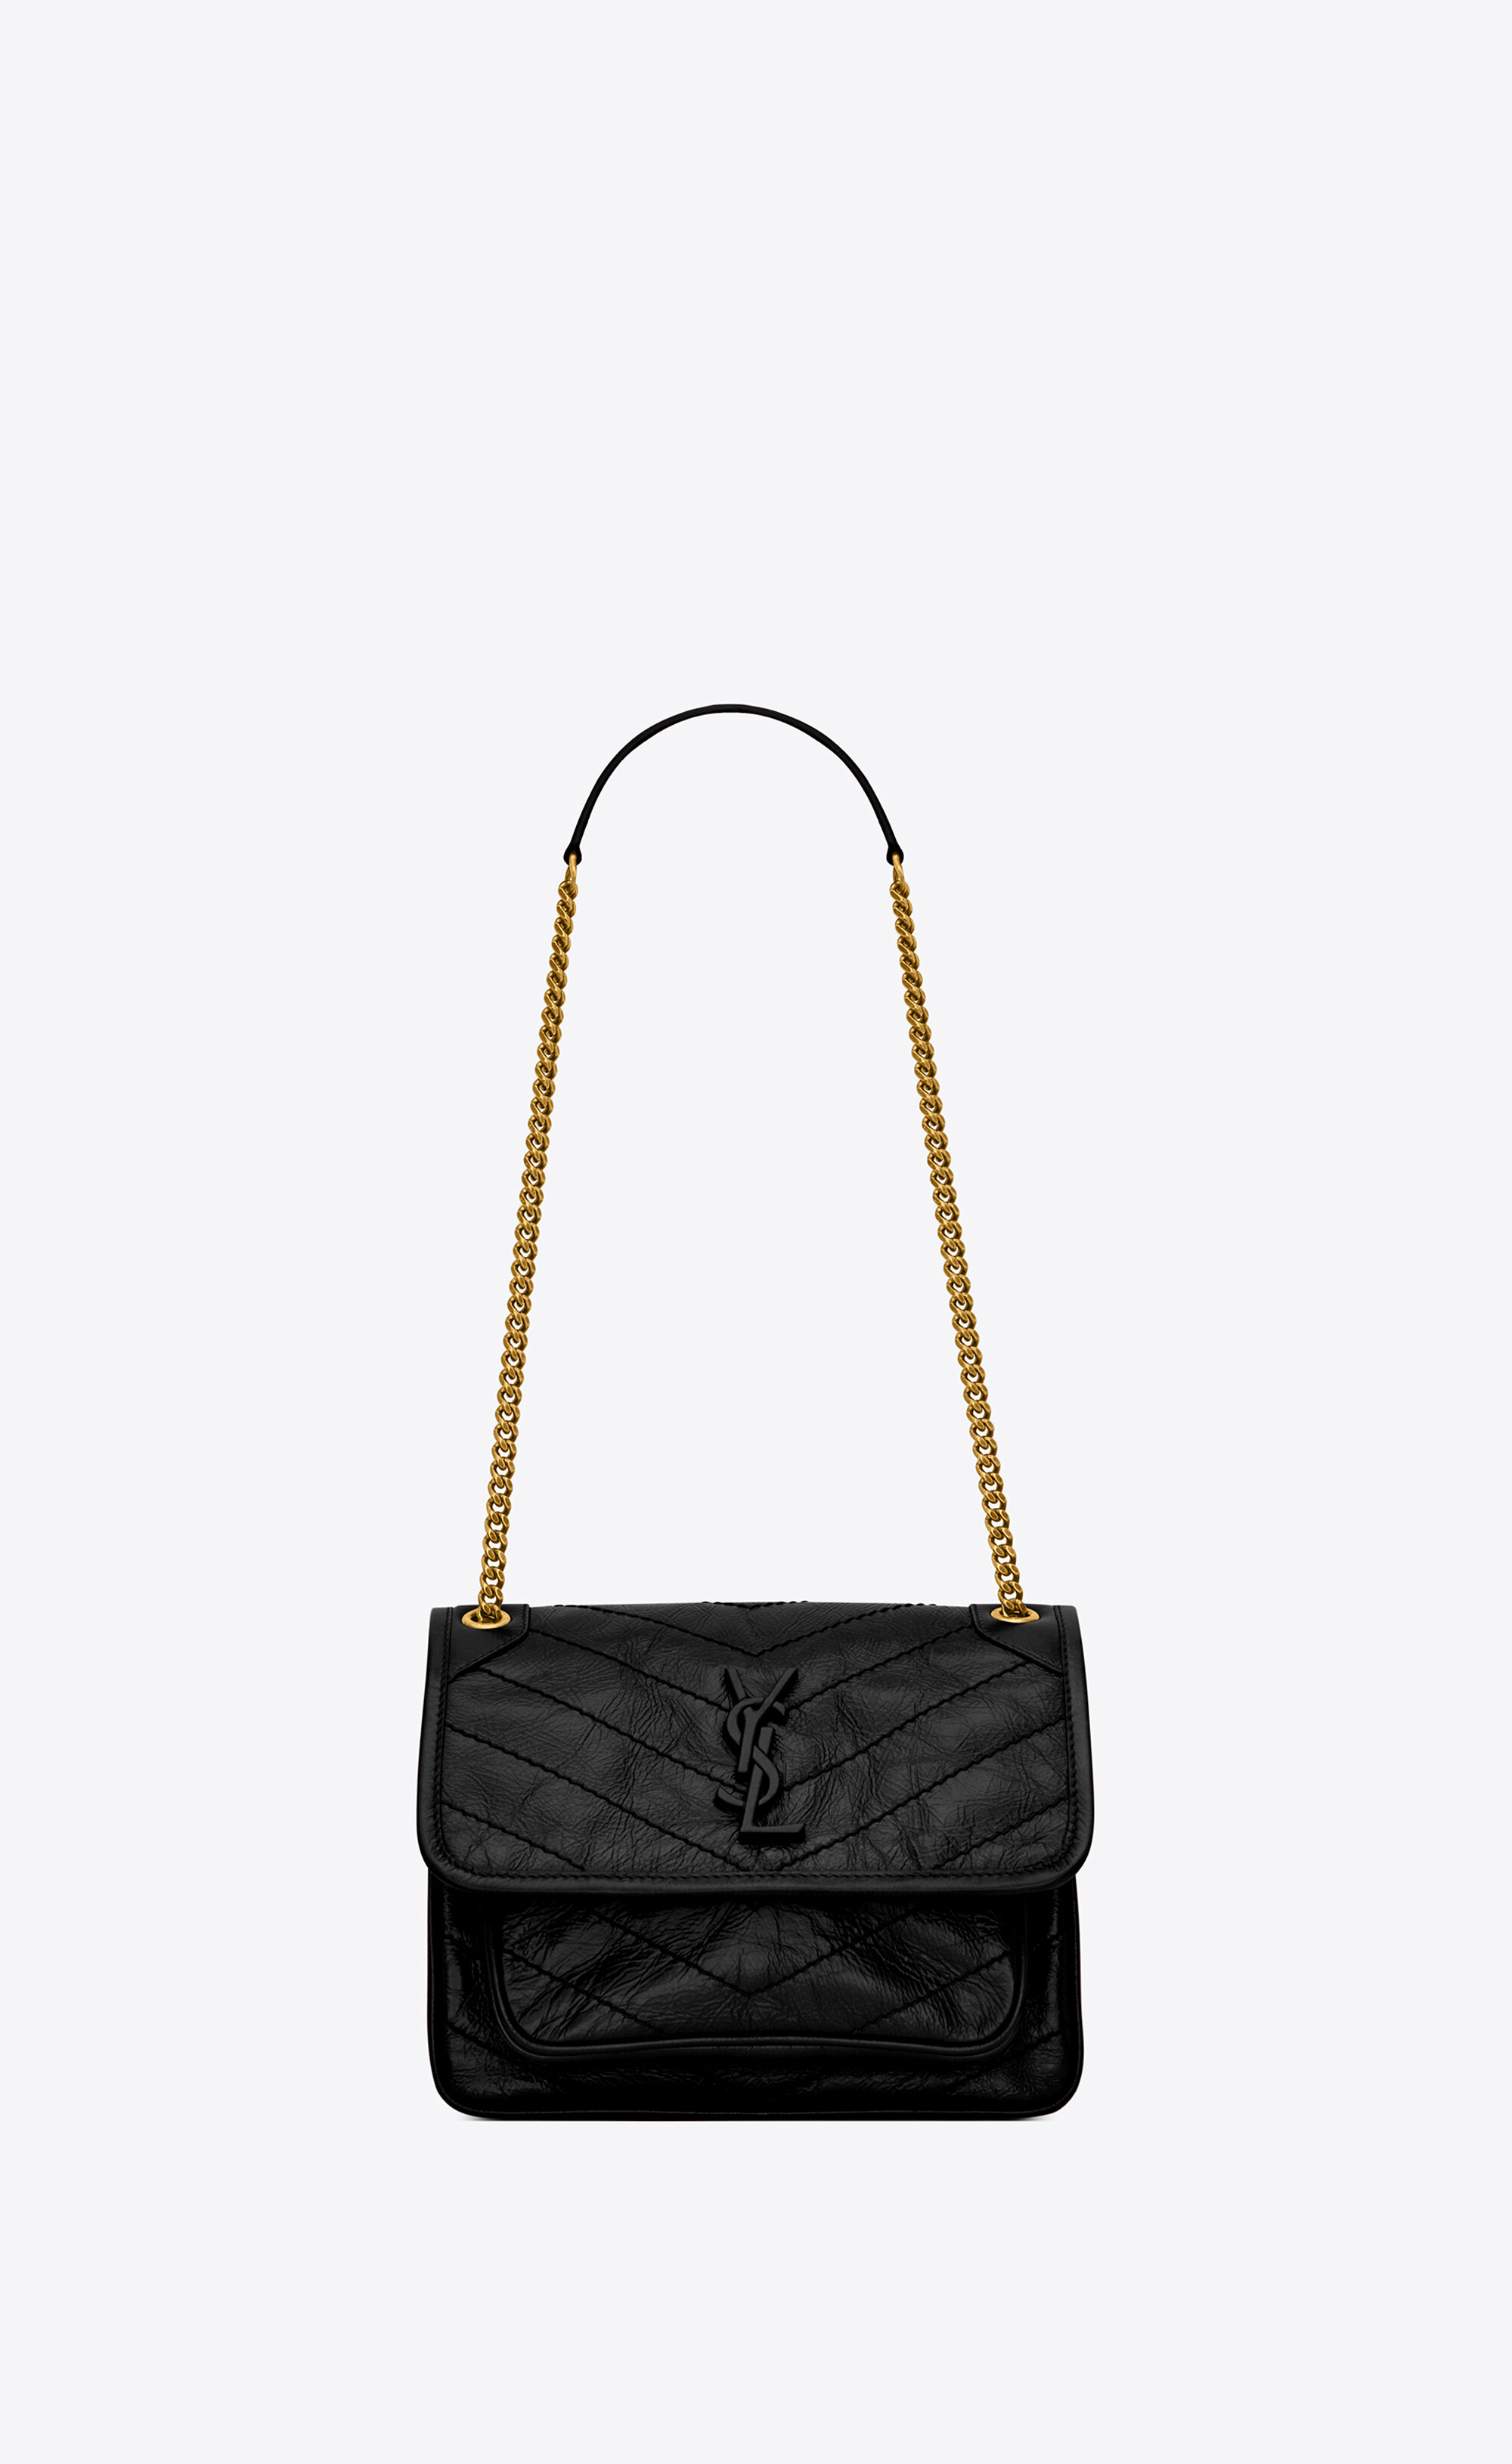 The Niki Baby Bag by Saint Laurent